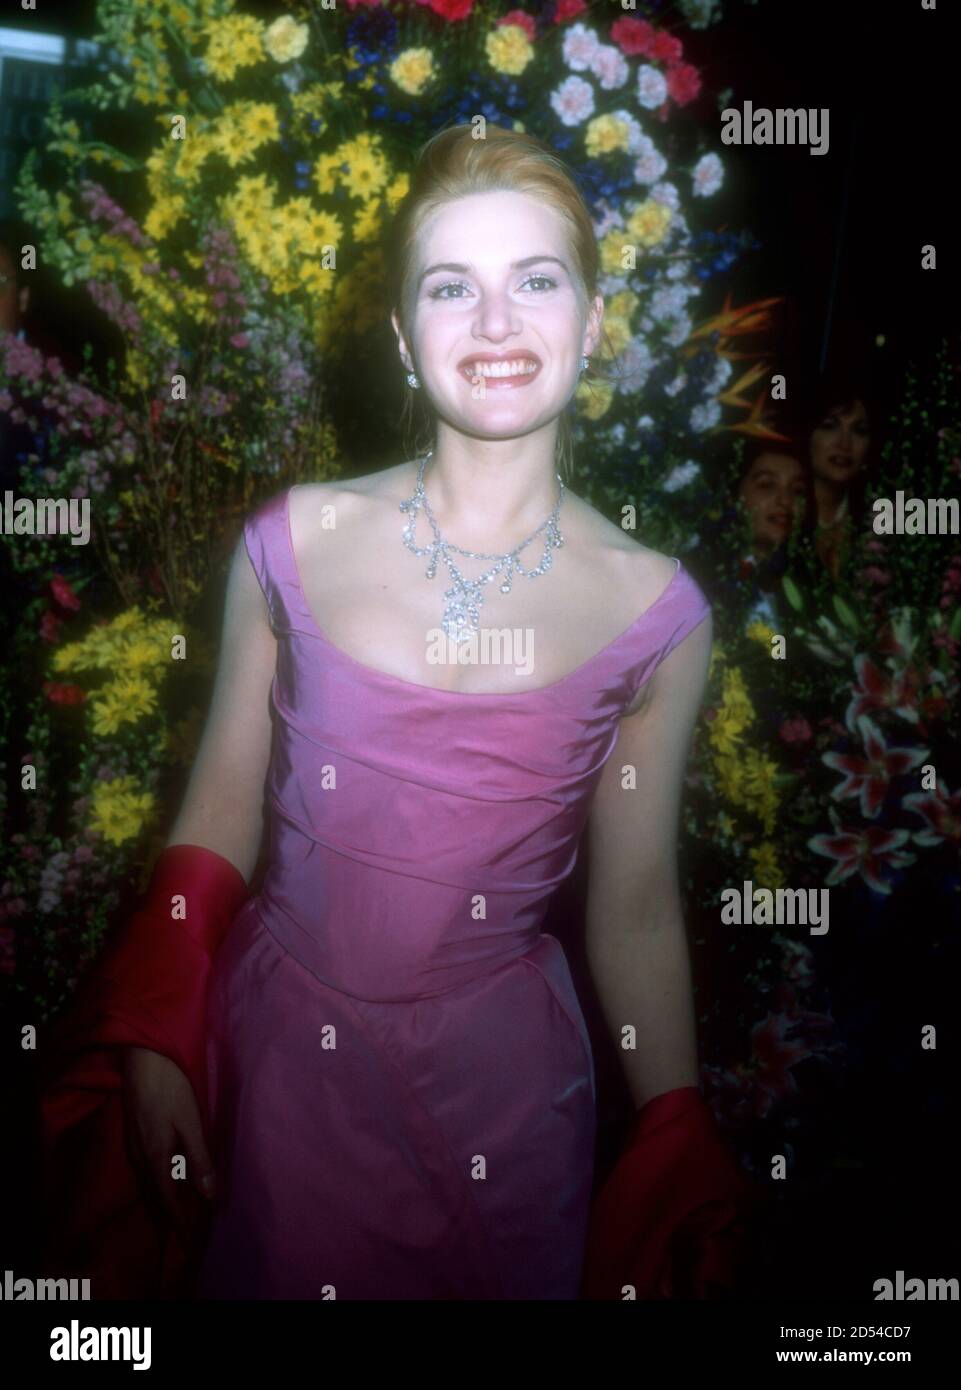 Los Angeles, Kalifornien, USA 25. März 1996 Schauspielerin Kate Winslet nimmt am 25. März 1996 an den 68. Annual Academy Awards in Dorothy Chandler Pavilioin in Los Angeles, Kalifornien, USA Teil. Foto von Barry King/Alamy Stockfoto Stockfoto